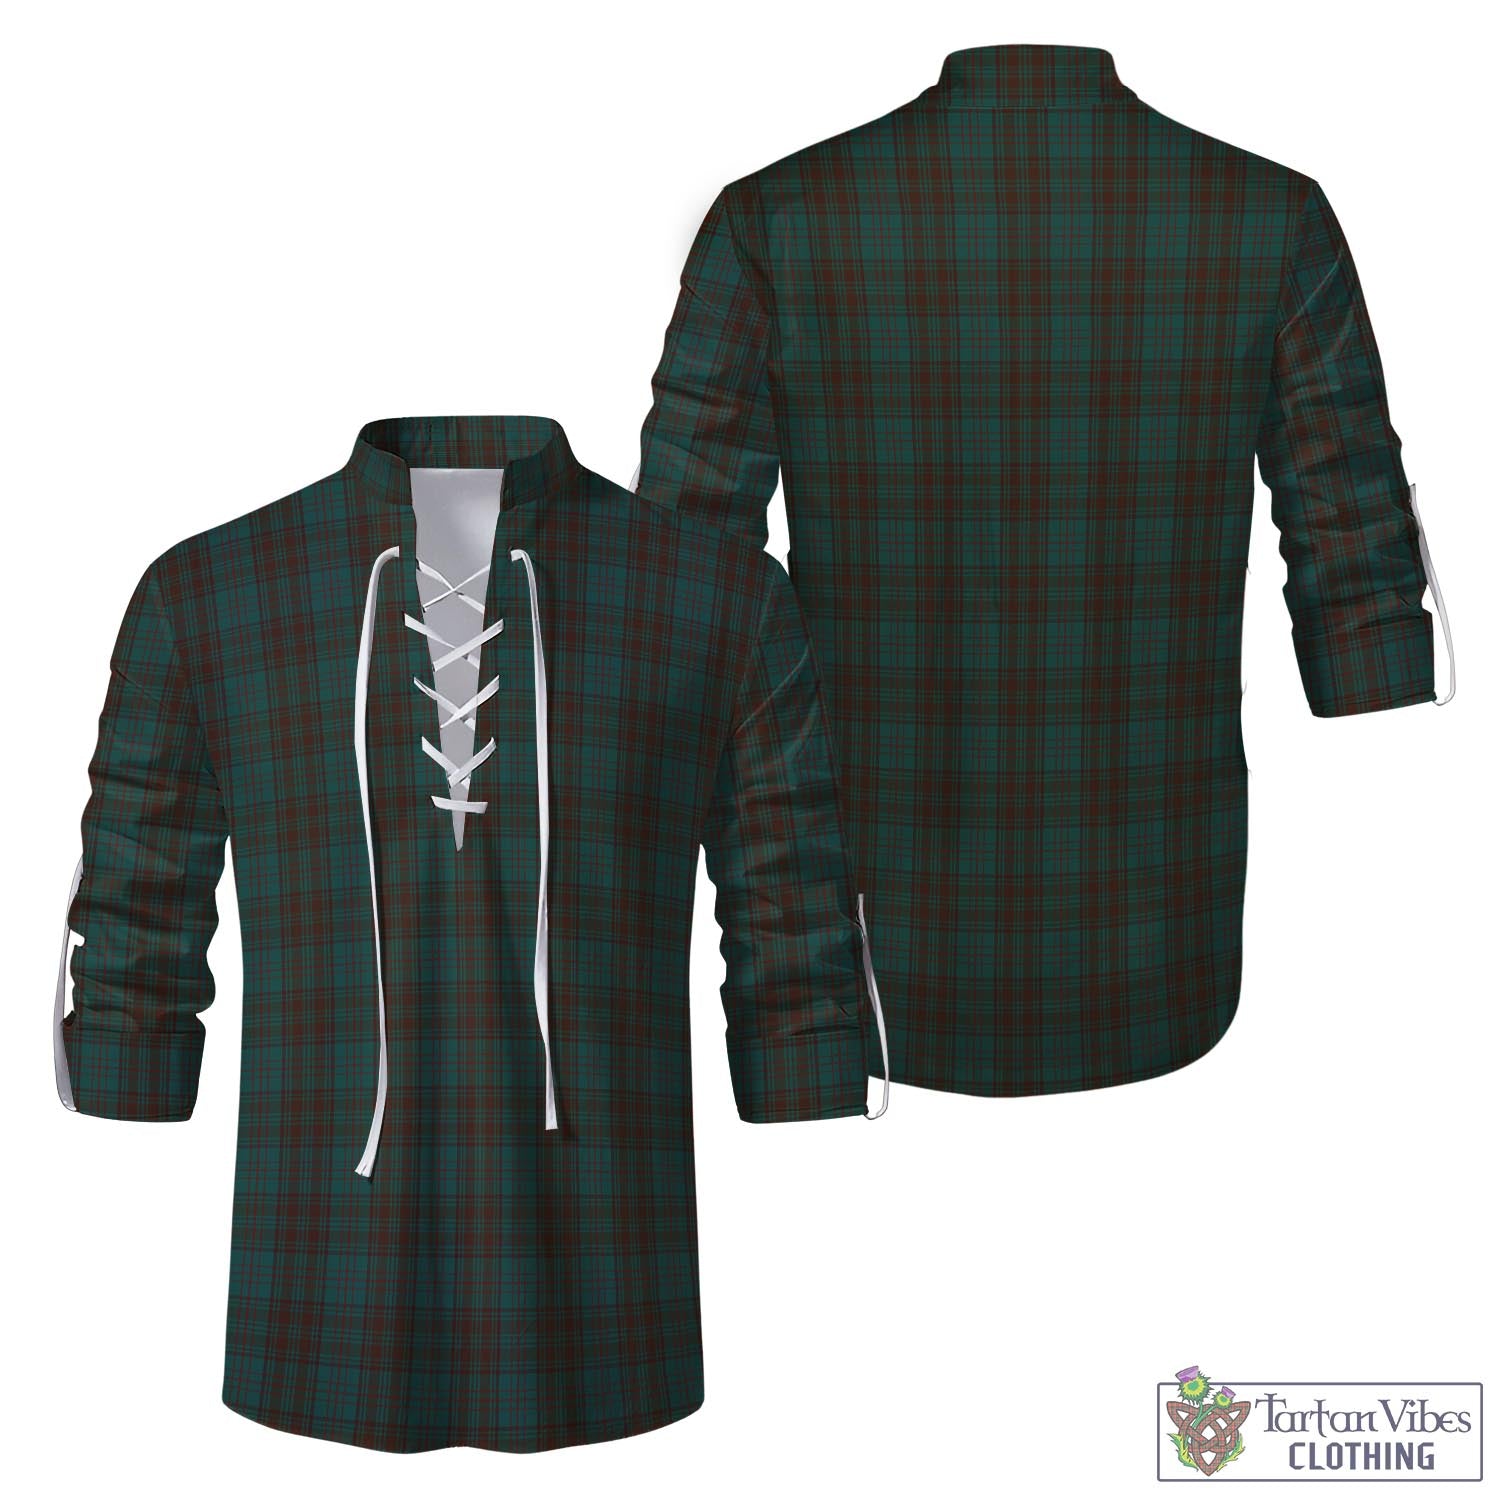 Tartan Vibes Clothing Dublin County Ireland Tartan Men's Scottish Traditional Jacobite Ghillie Kilt Shirt